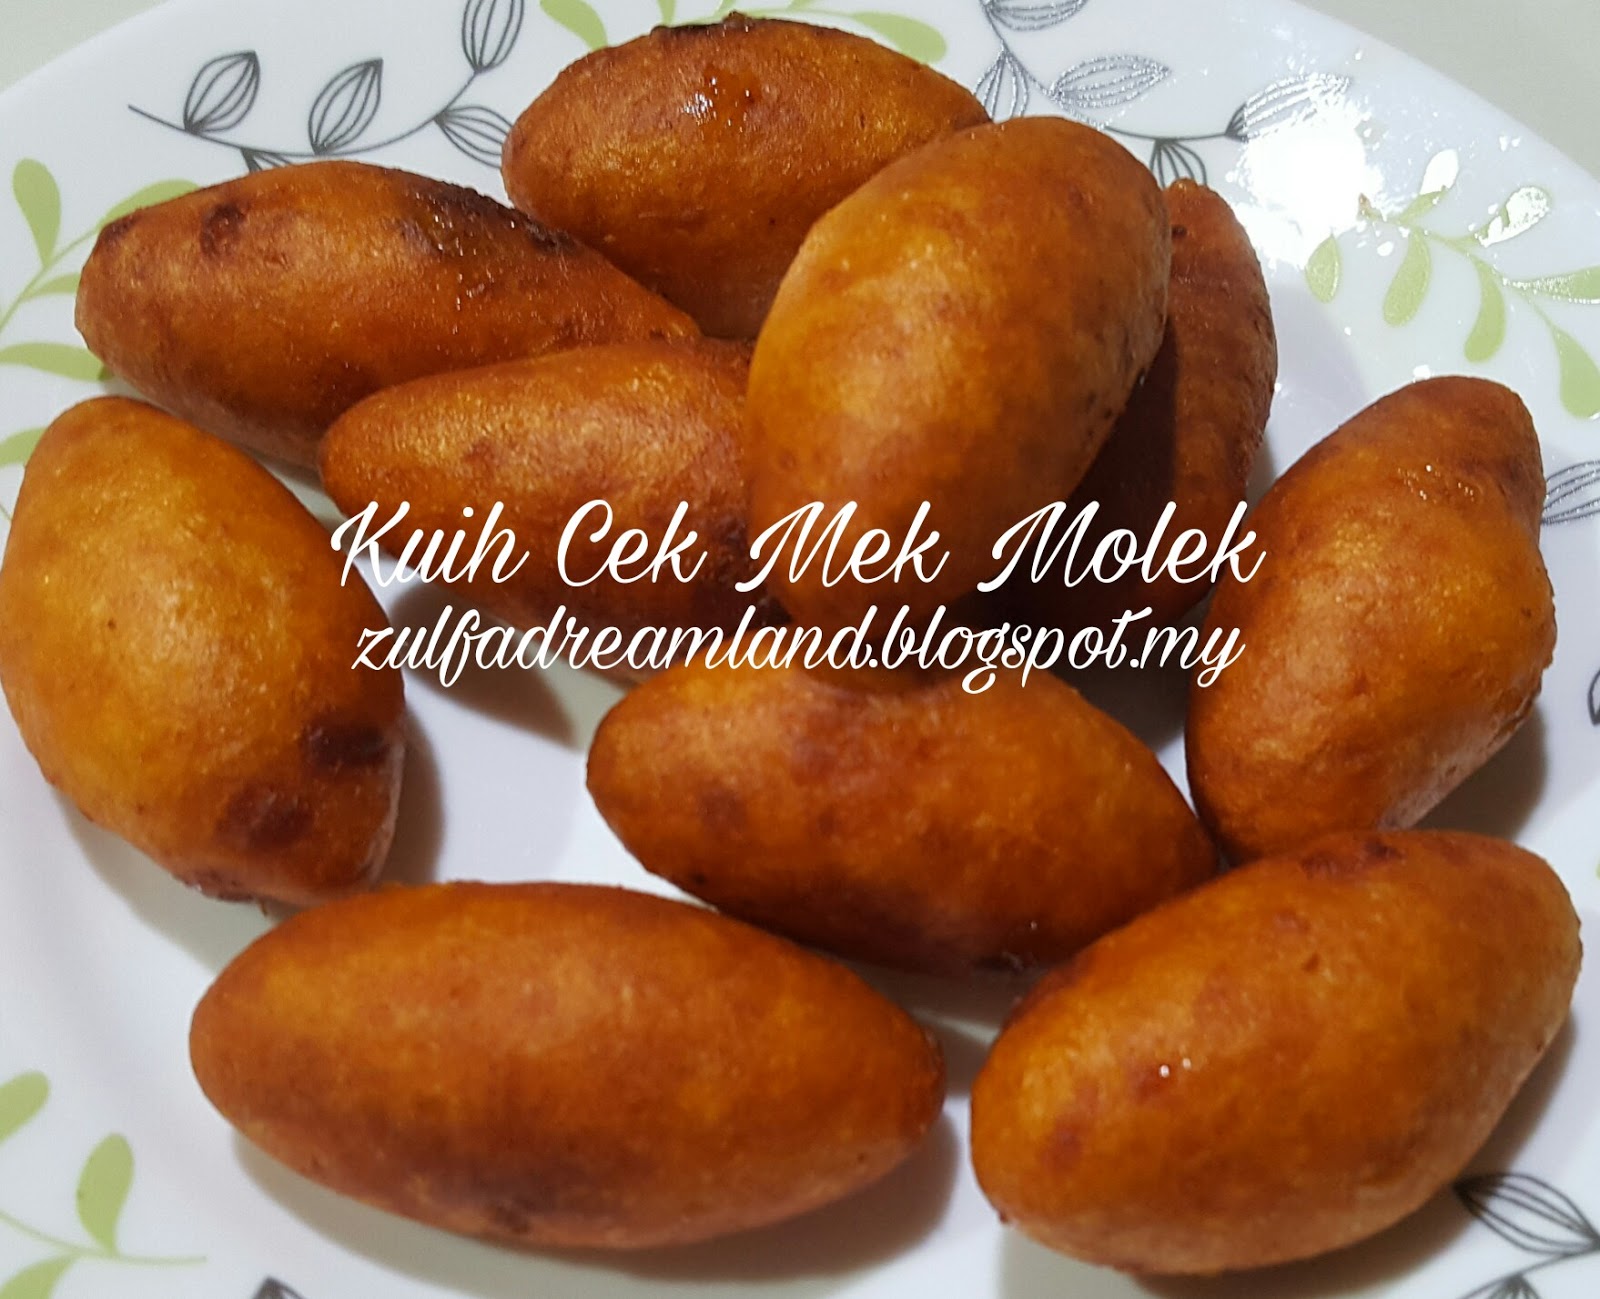 ZULFAZA LOVES COOKING: Kuih Cek Mek Molek